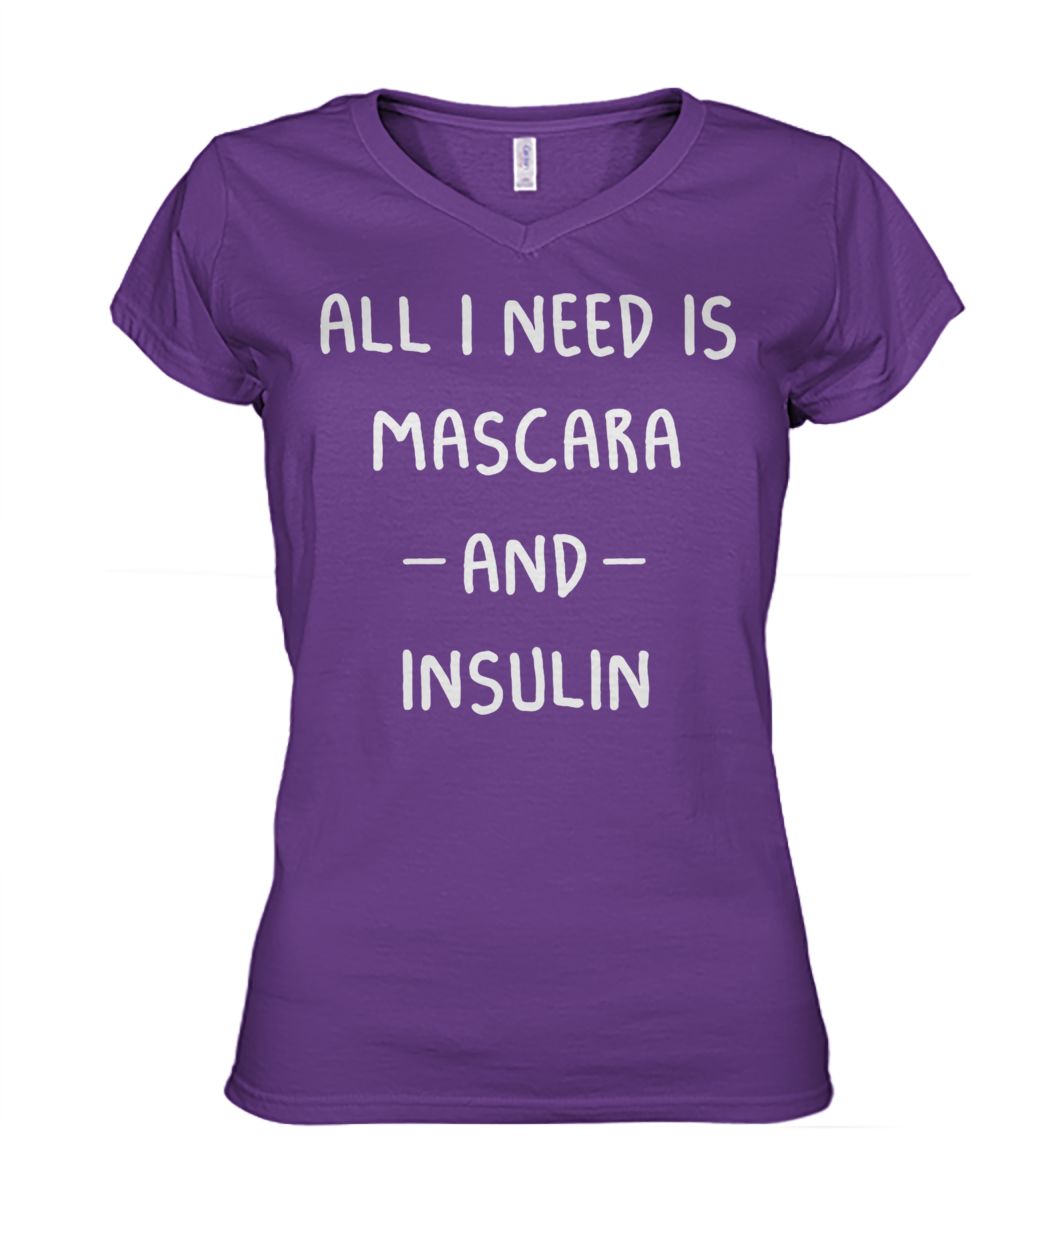 All I need is mascara and insulin women's v-neck